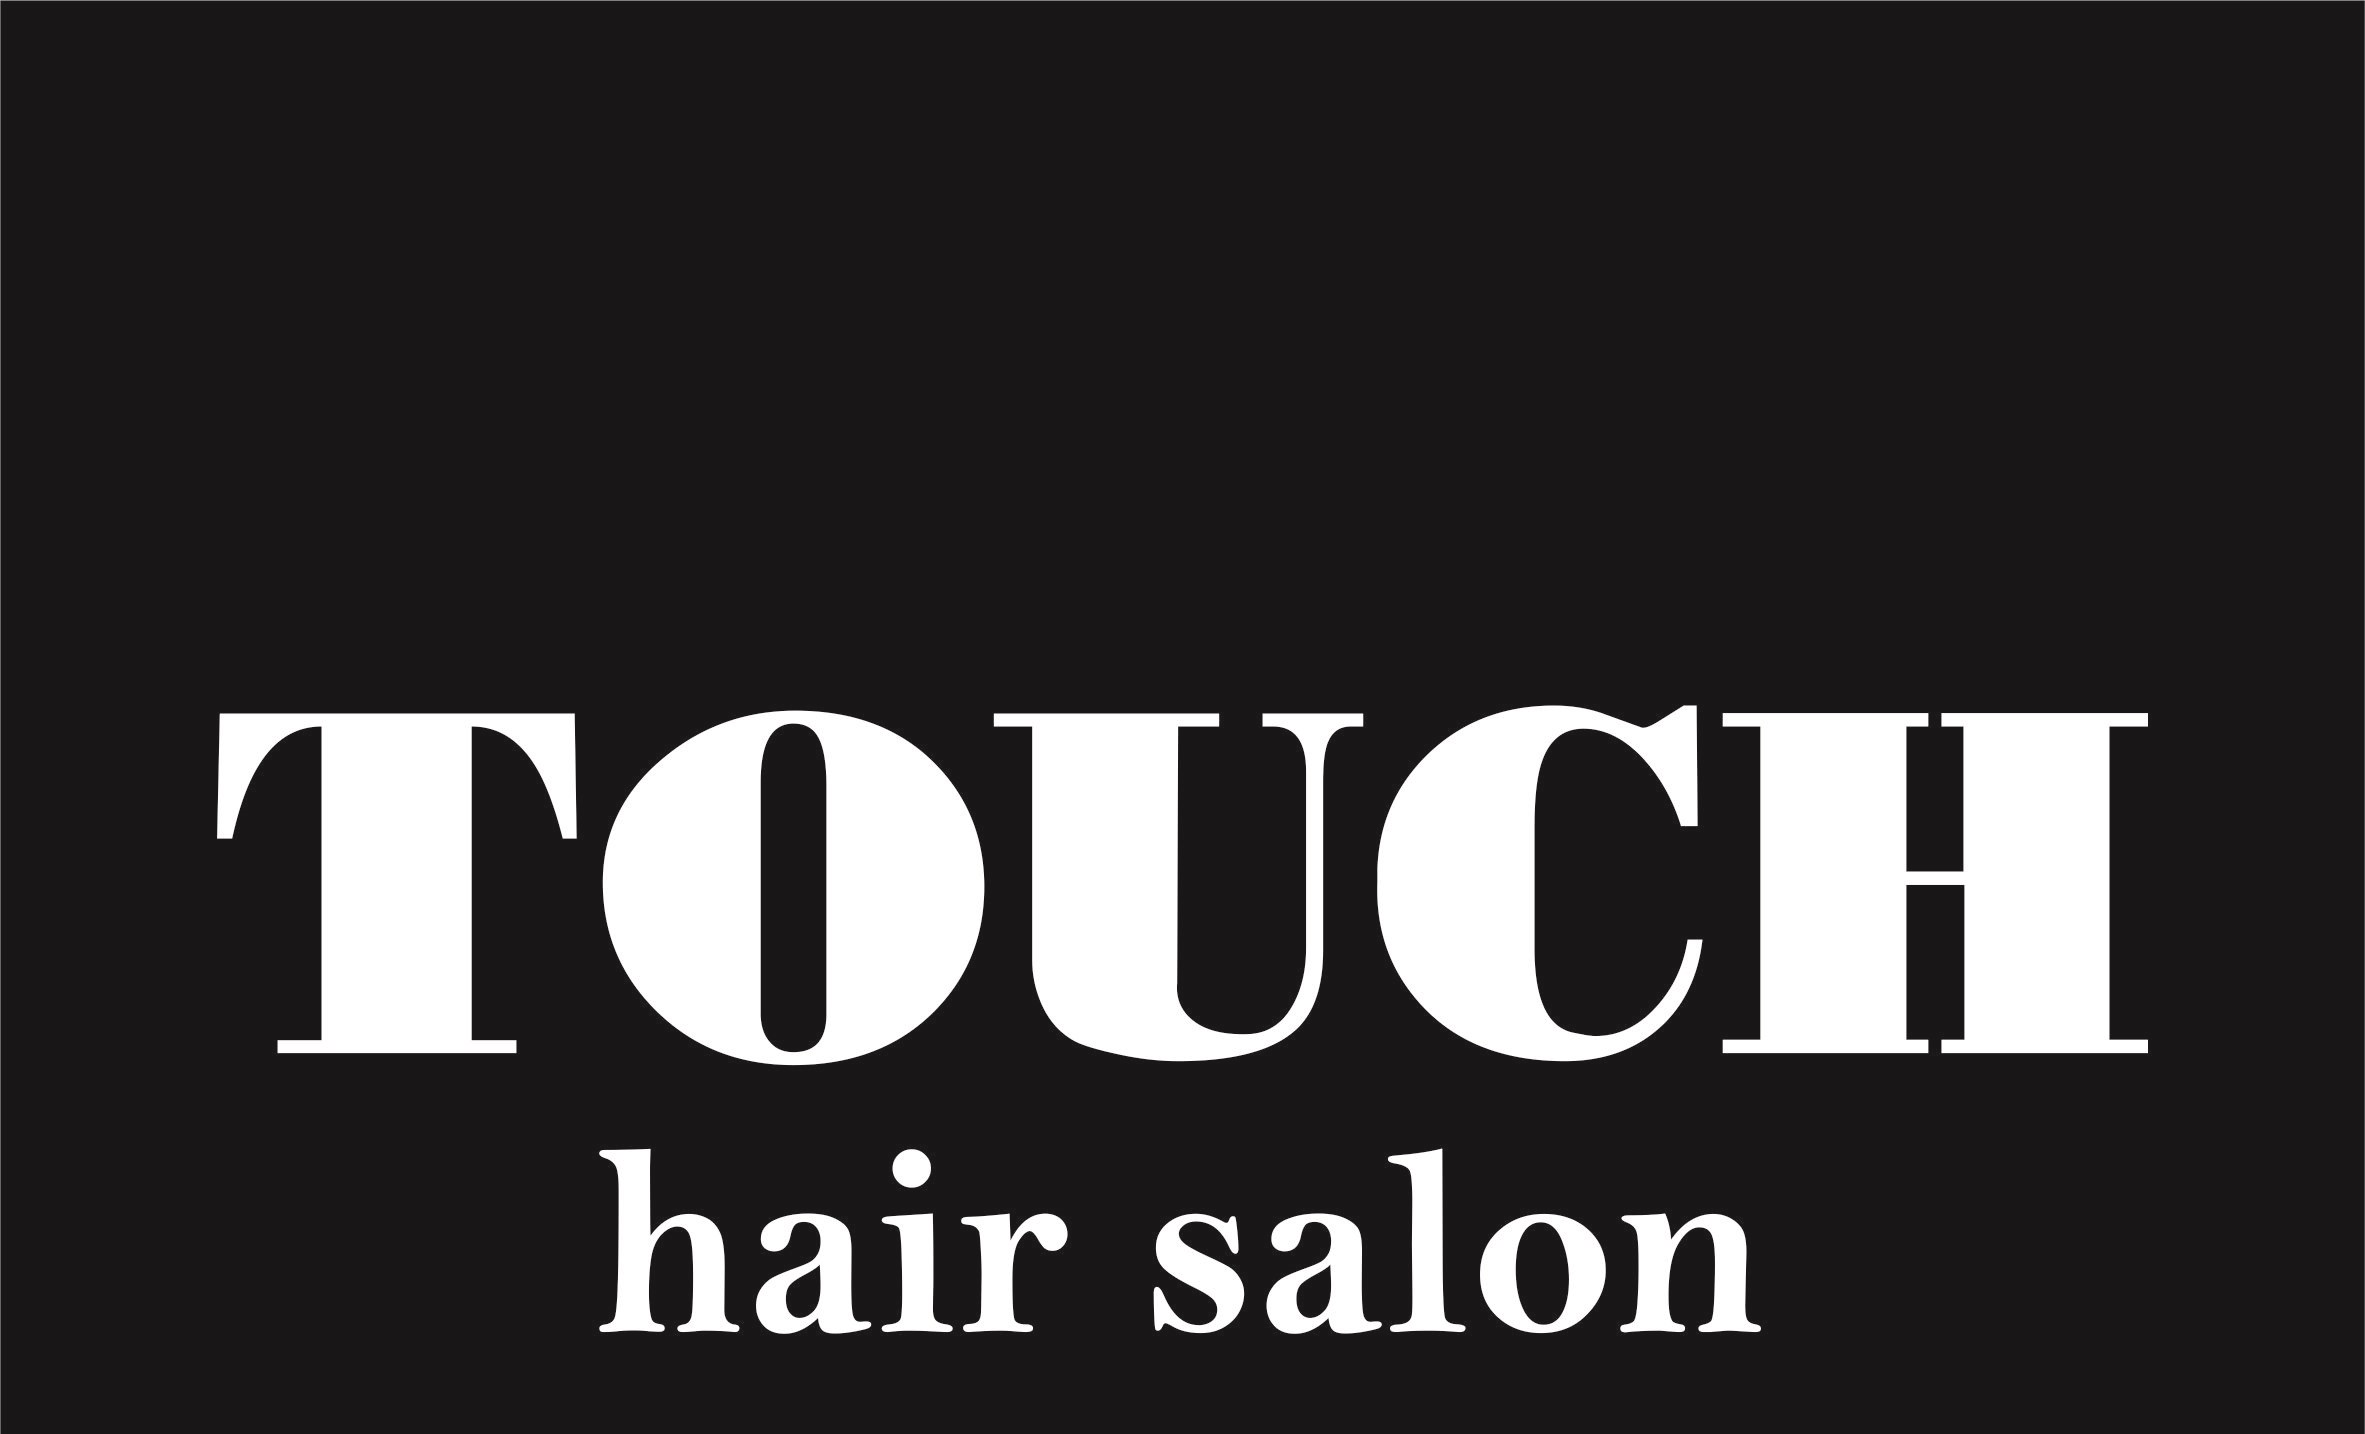 Touch Hair Salon髮型屋Salon/髮型師工作招聘:銅鑼灣區髮型屋誠聘 FREELANCE